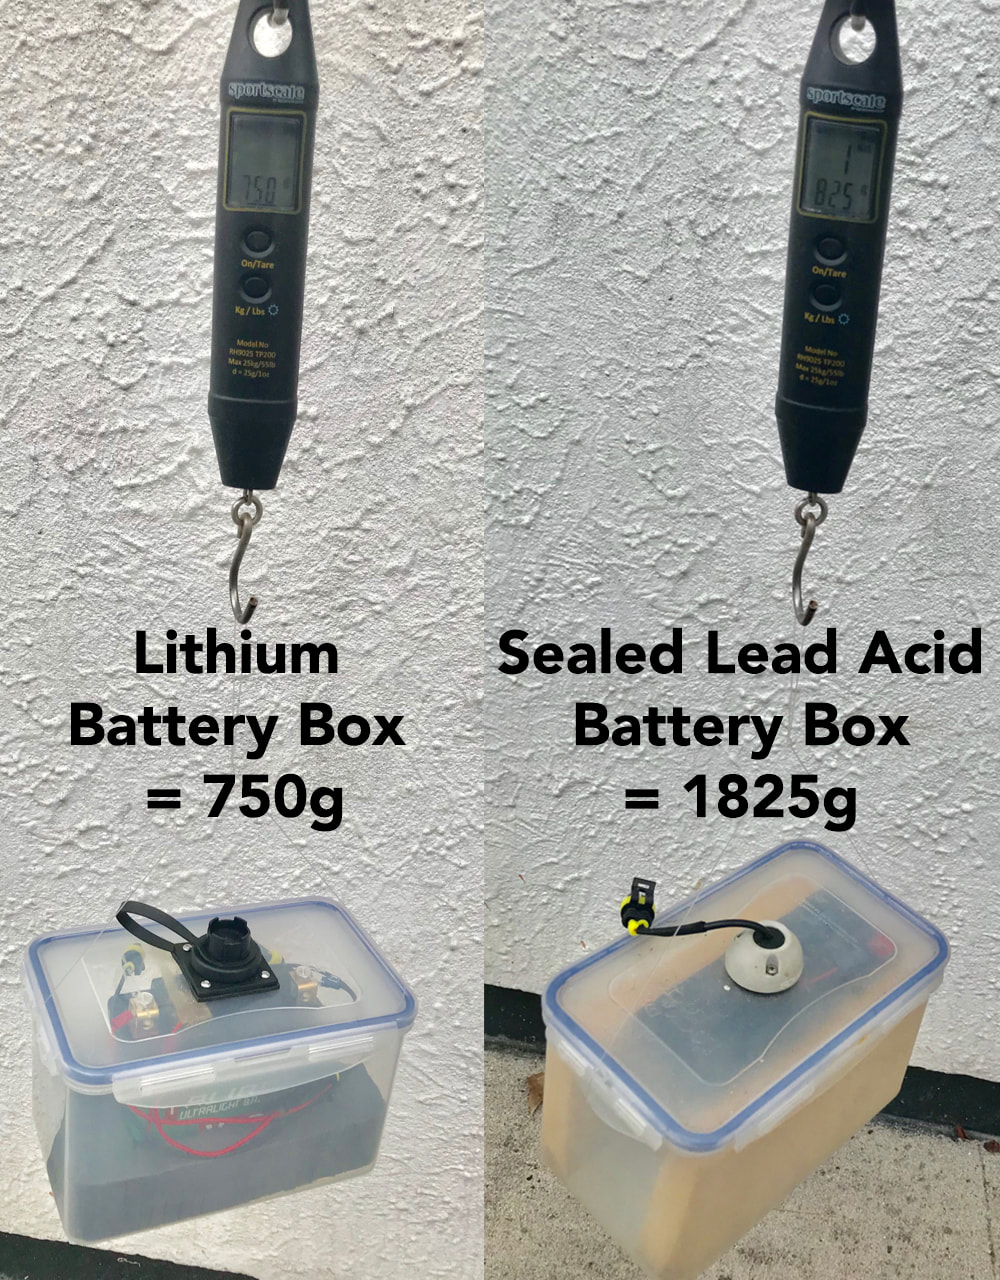 Lithium Battery Box vs Sealed Lead Acid Battery Box - Weight Saving